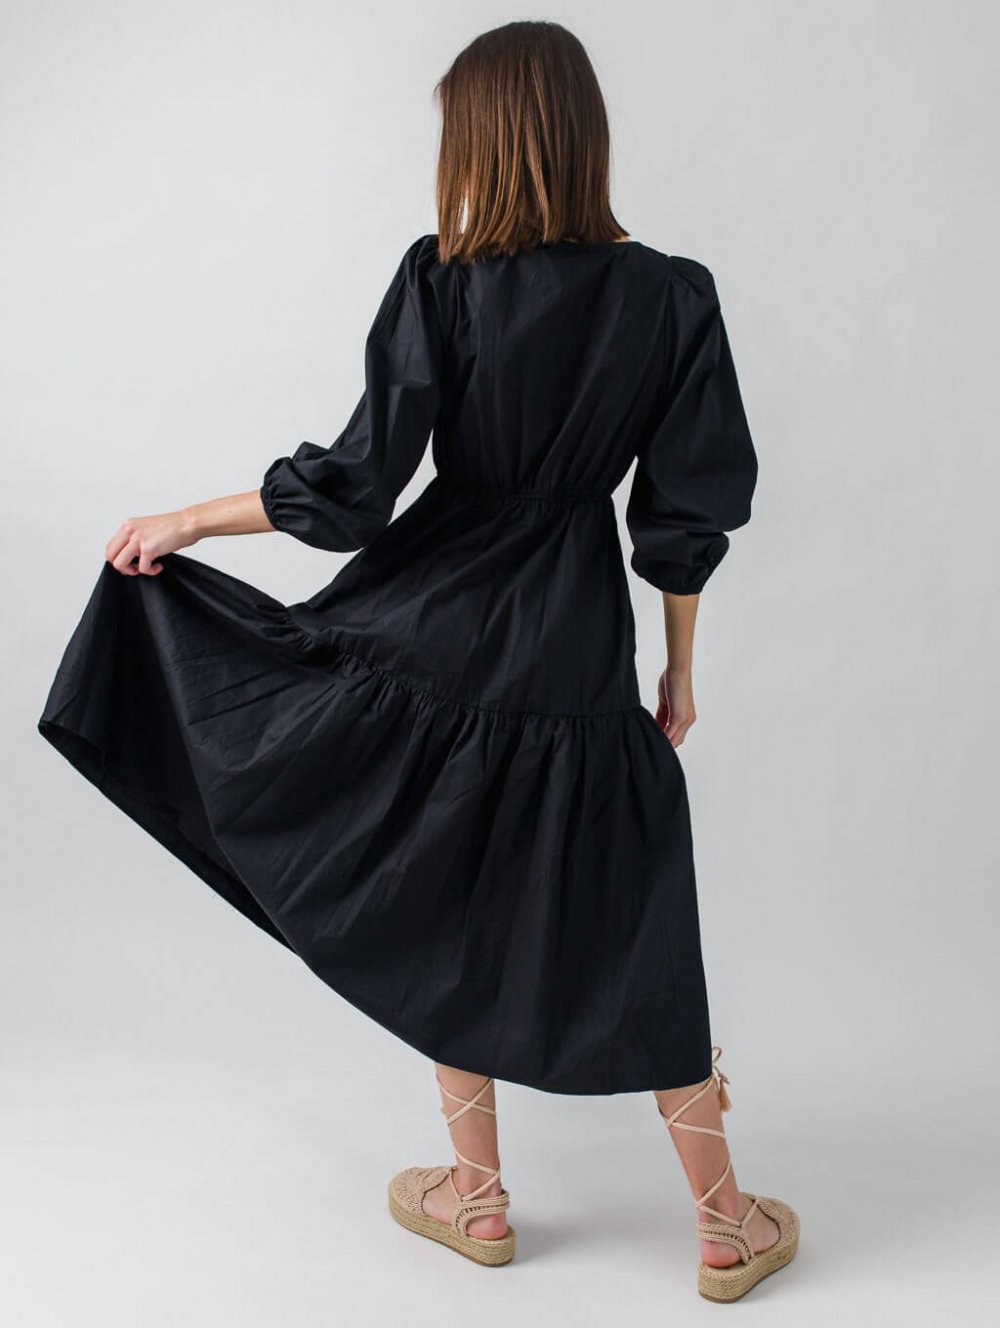 Čierne šaty Mirasa